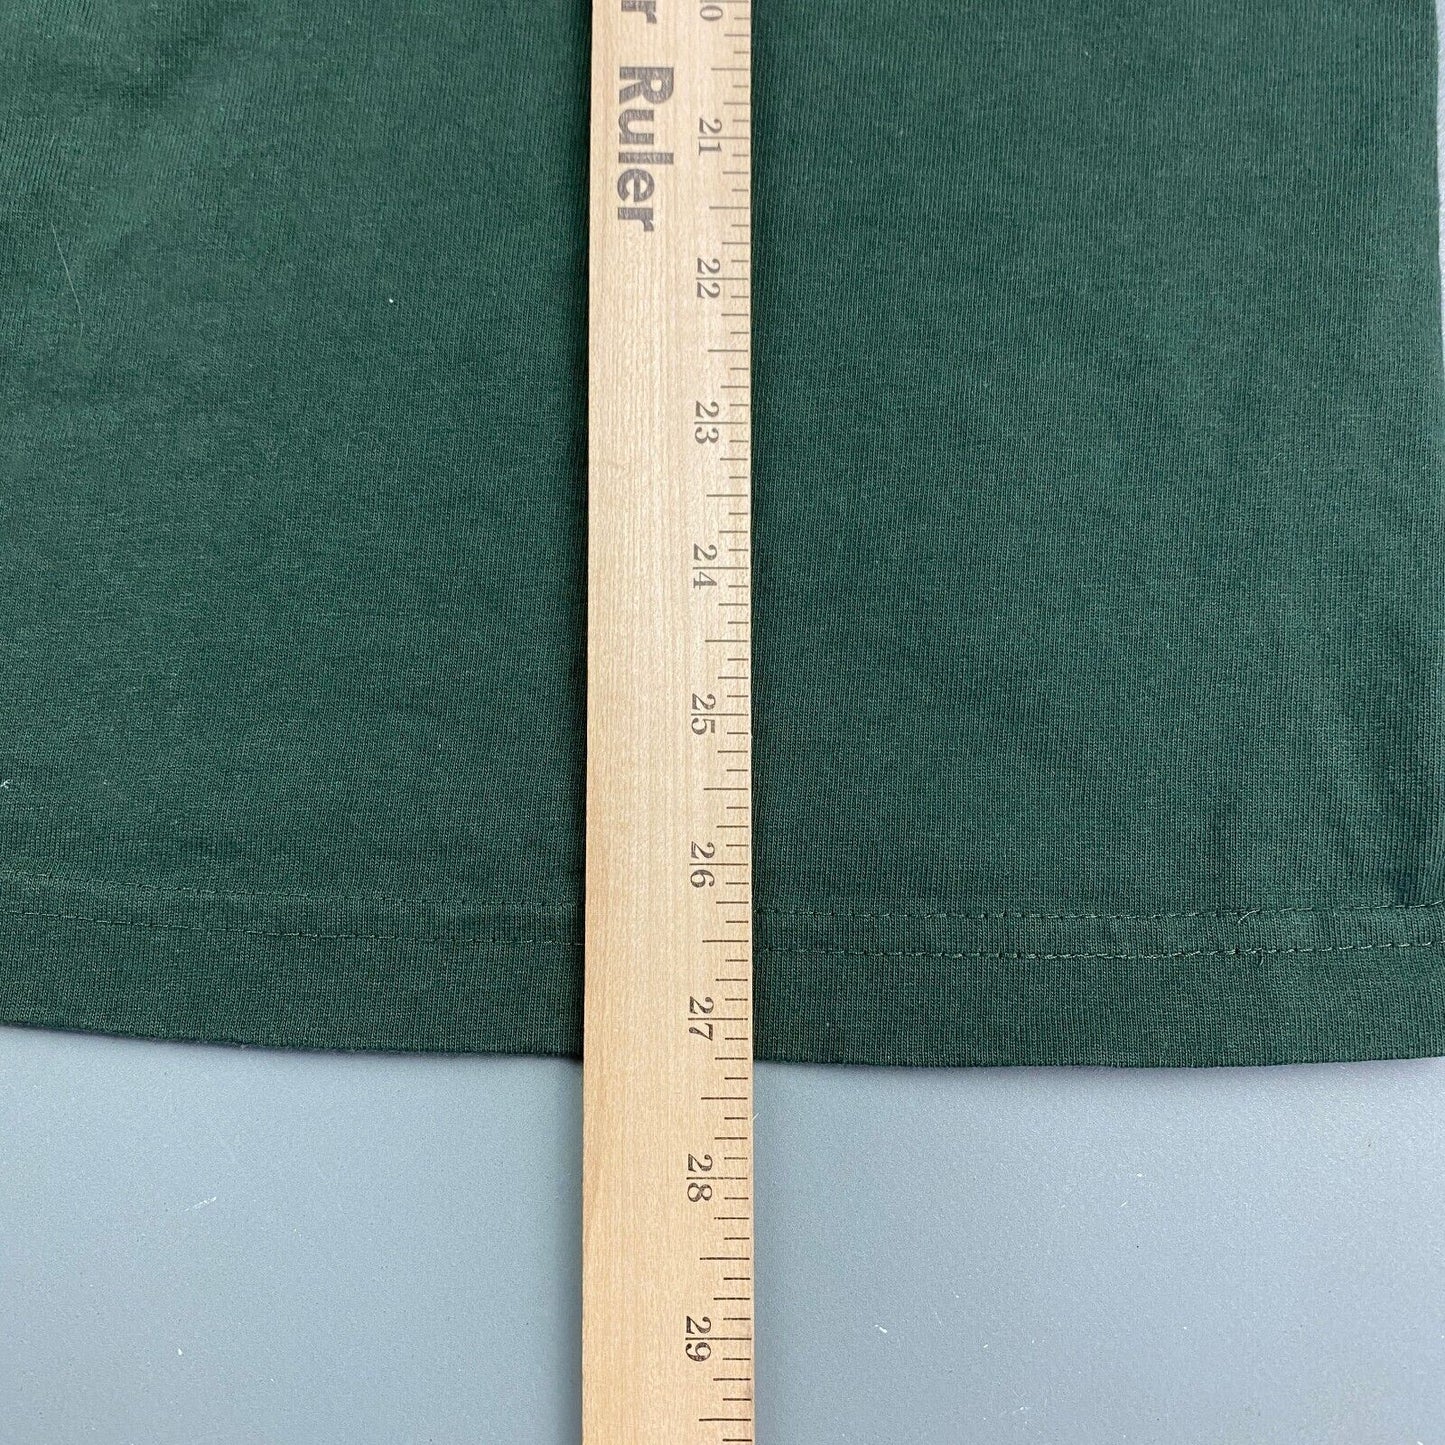 VINTAGE 90s Embroidered Alaska Green T-Shirt sz Medium Men Adult